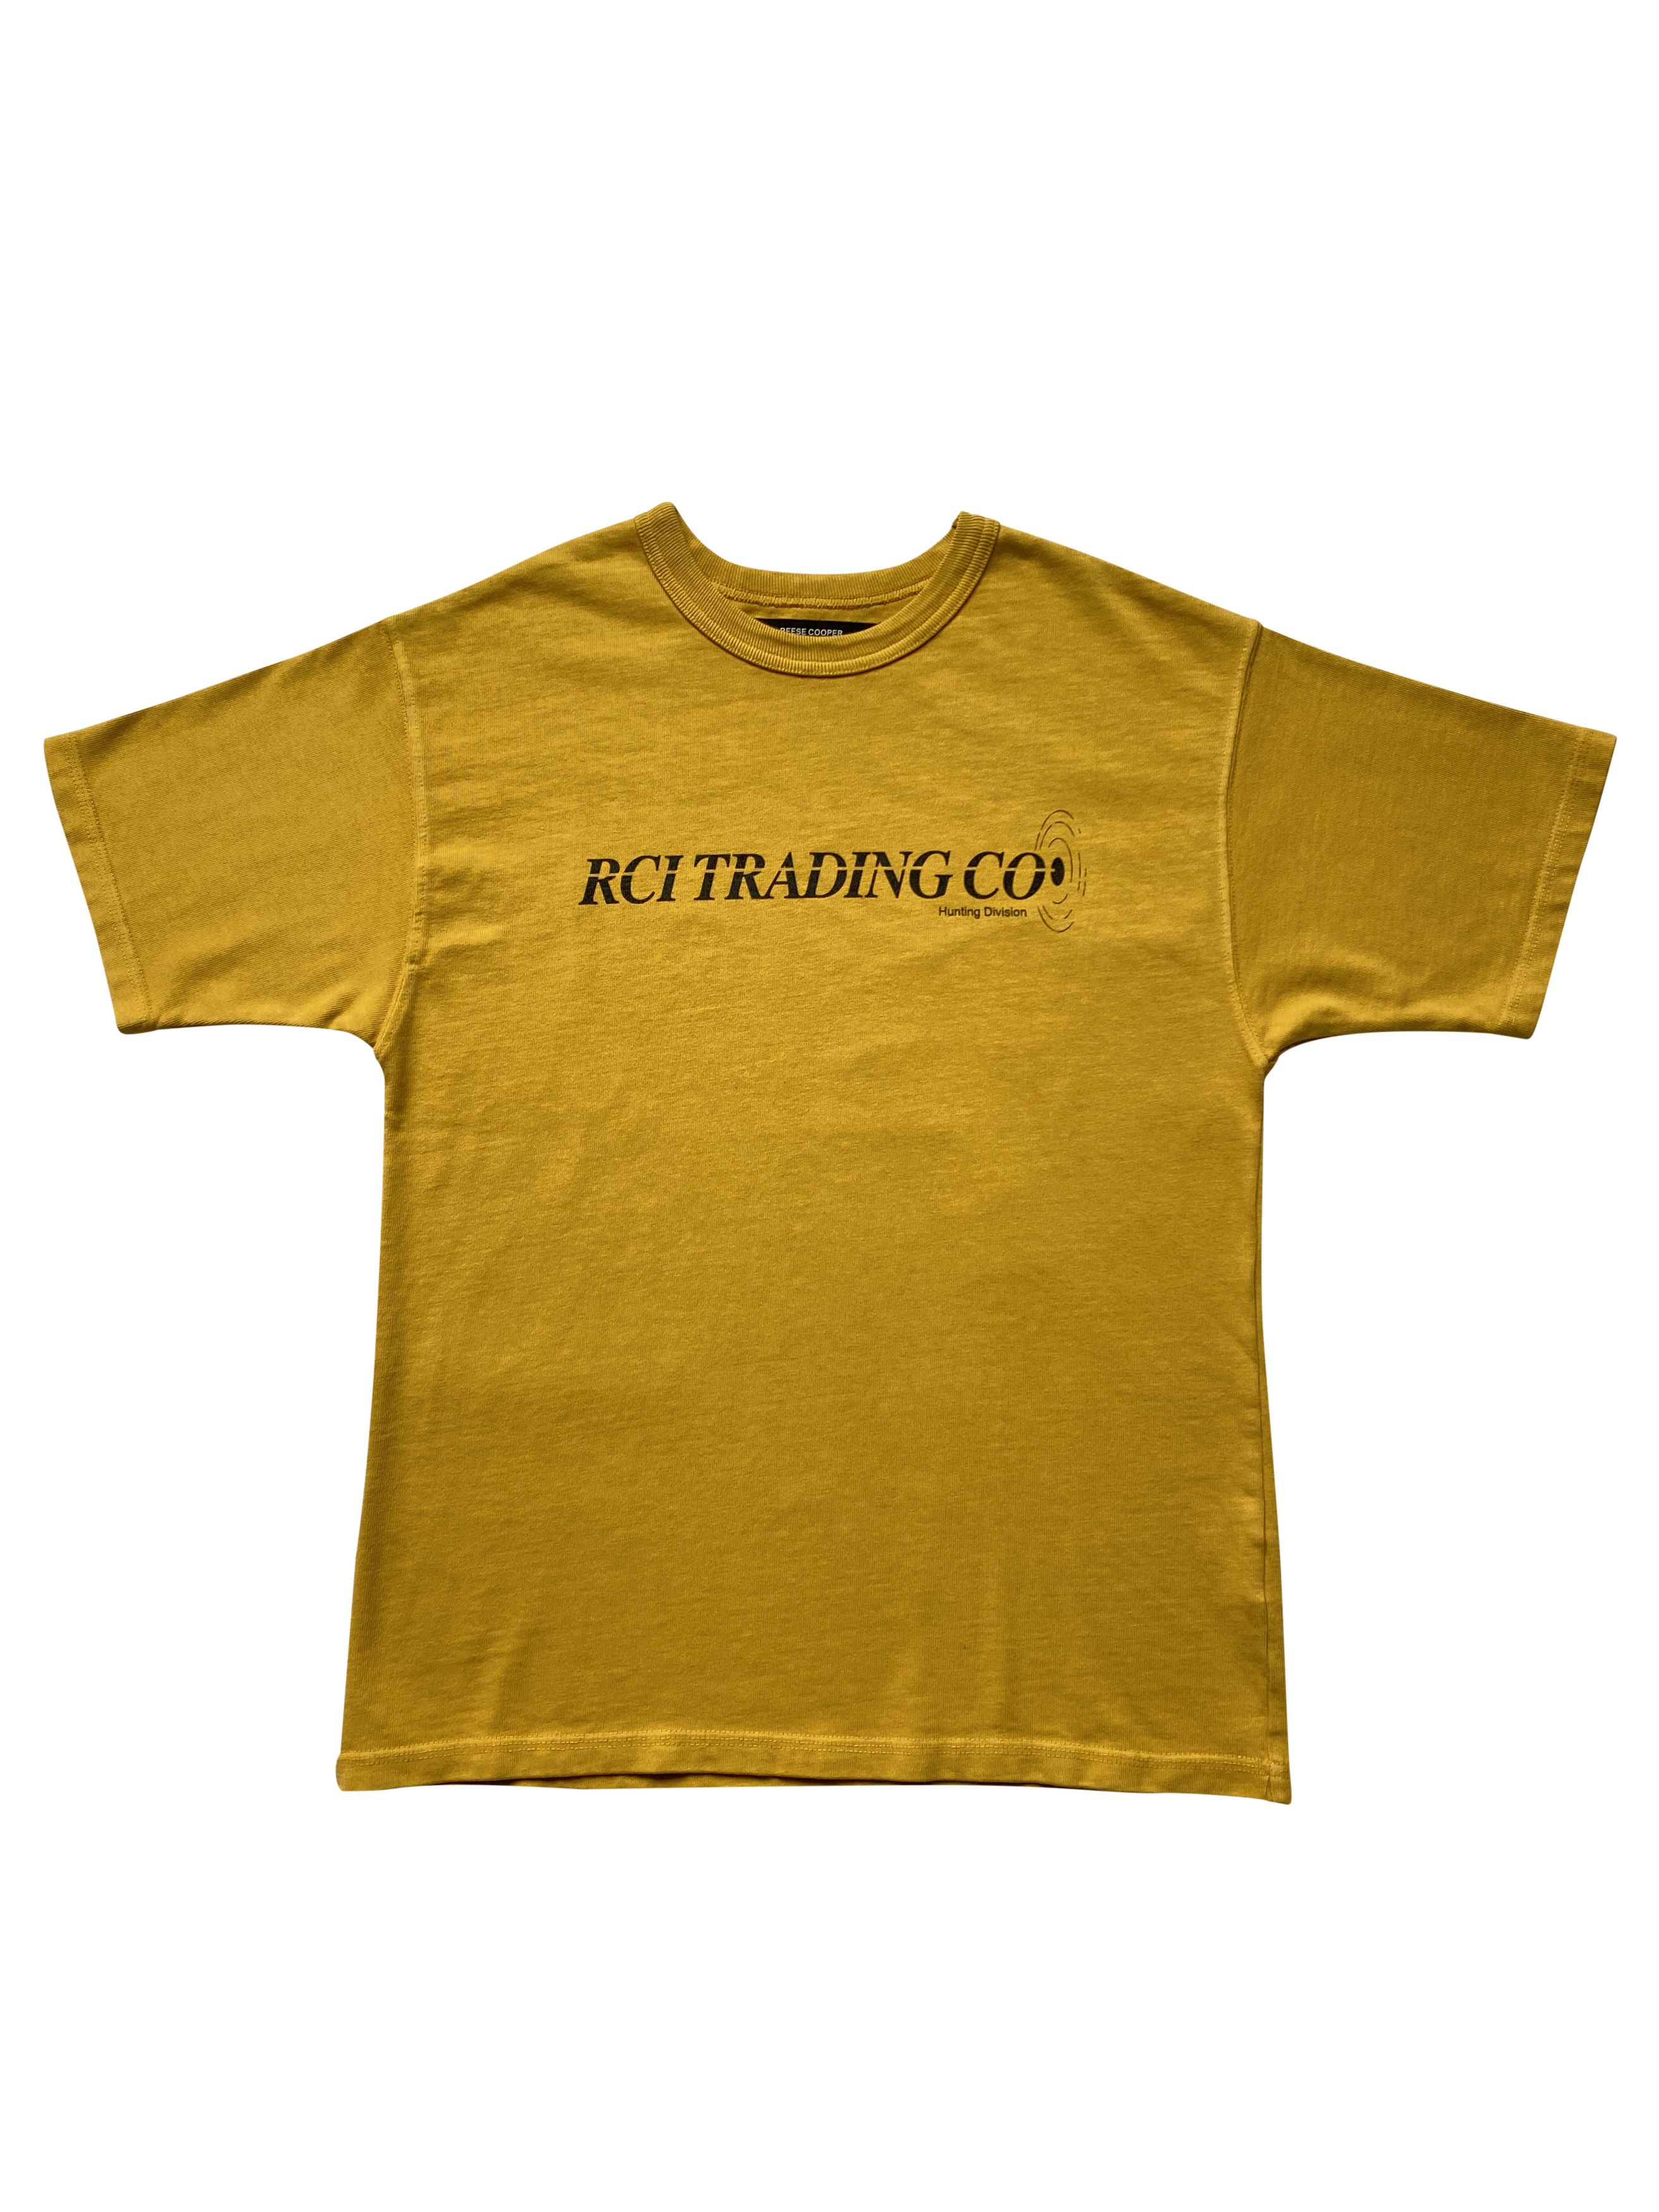 Reese Cooper ⚡️QUICK SALE⚡️Reese Cooper Mustard Tshirt | Grailed